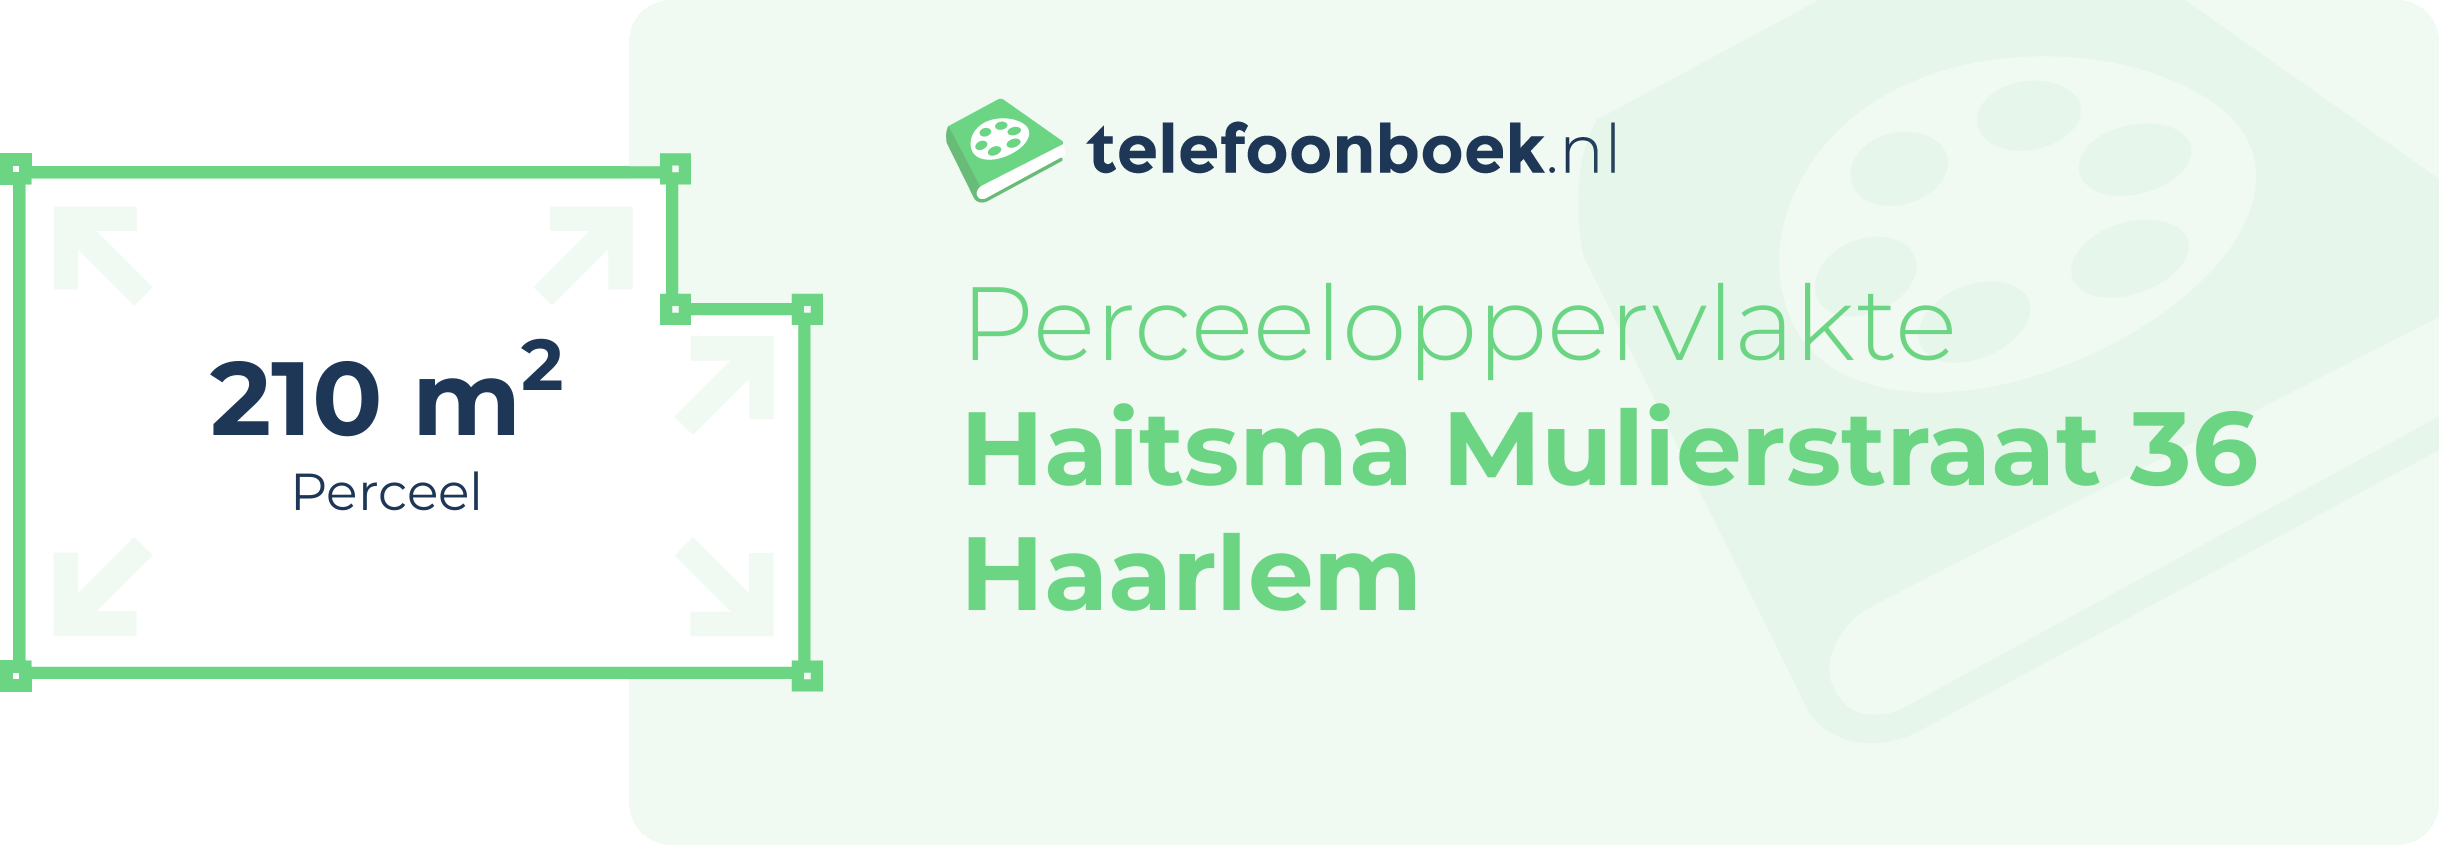 Perceeloppervlakte Haitsma Mulierstraat 36 Haarlem